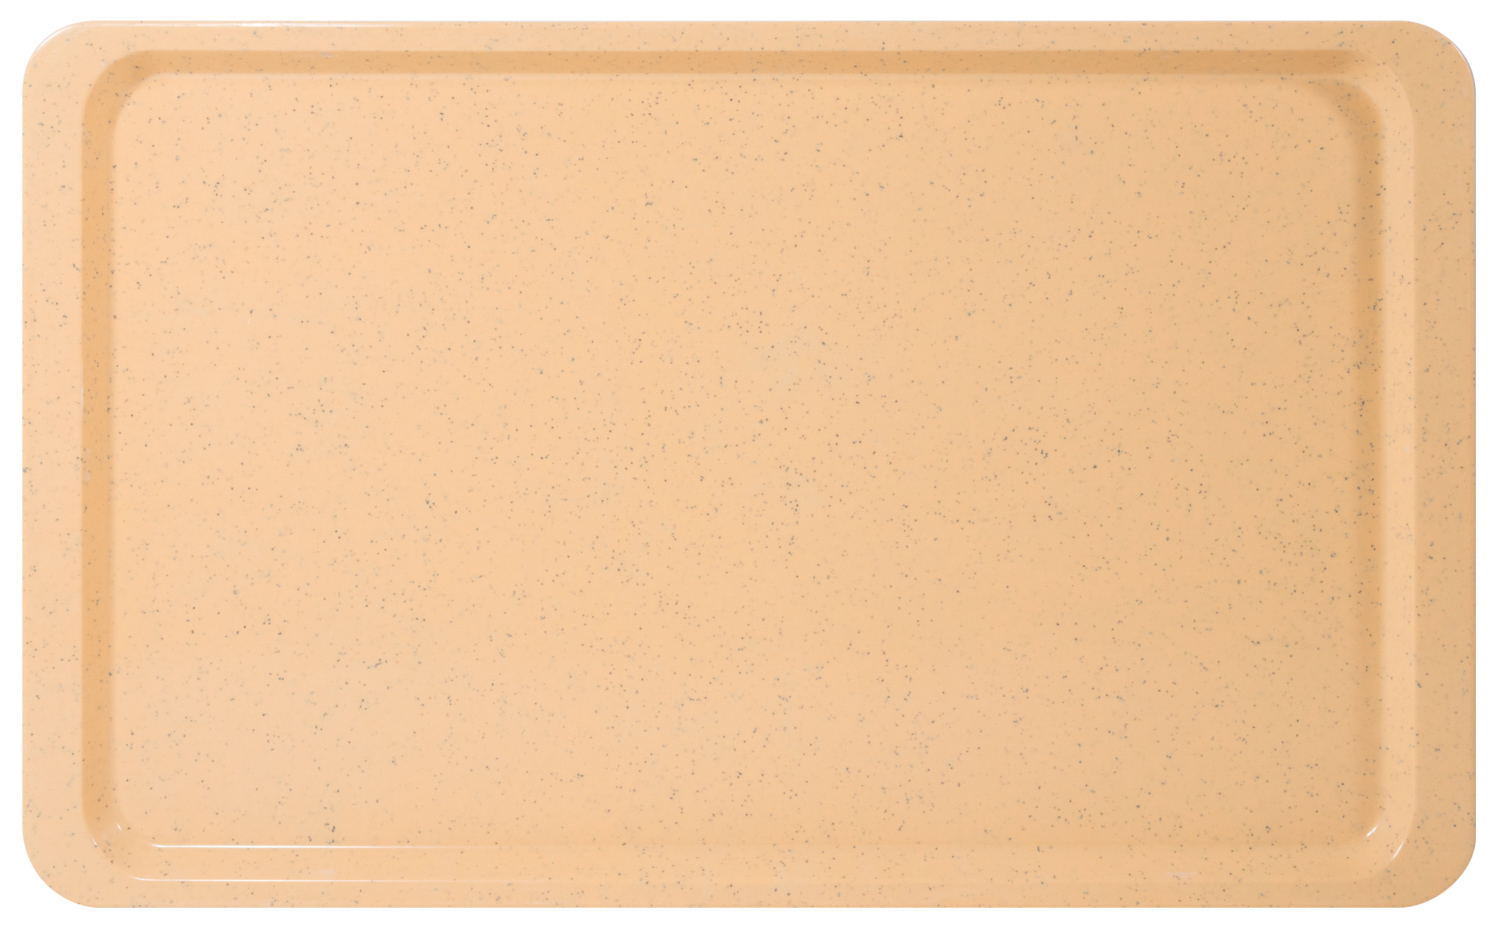 Tablett EASY Euronorm EN 1/1, Farbe: melba, aus glasfaserverstärktem Polyesterharz, Länge: 53 cm, Breite: 37 cm, Höhe: 1,6 cm